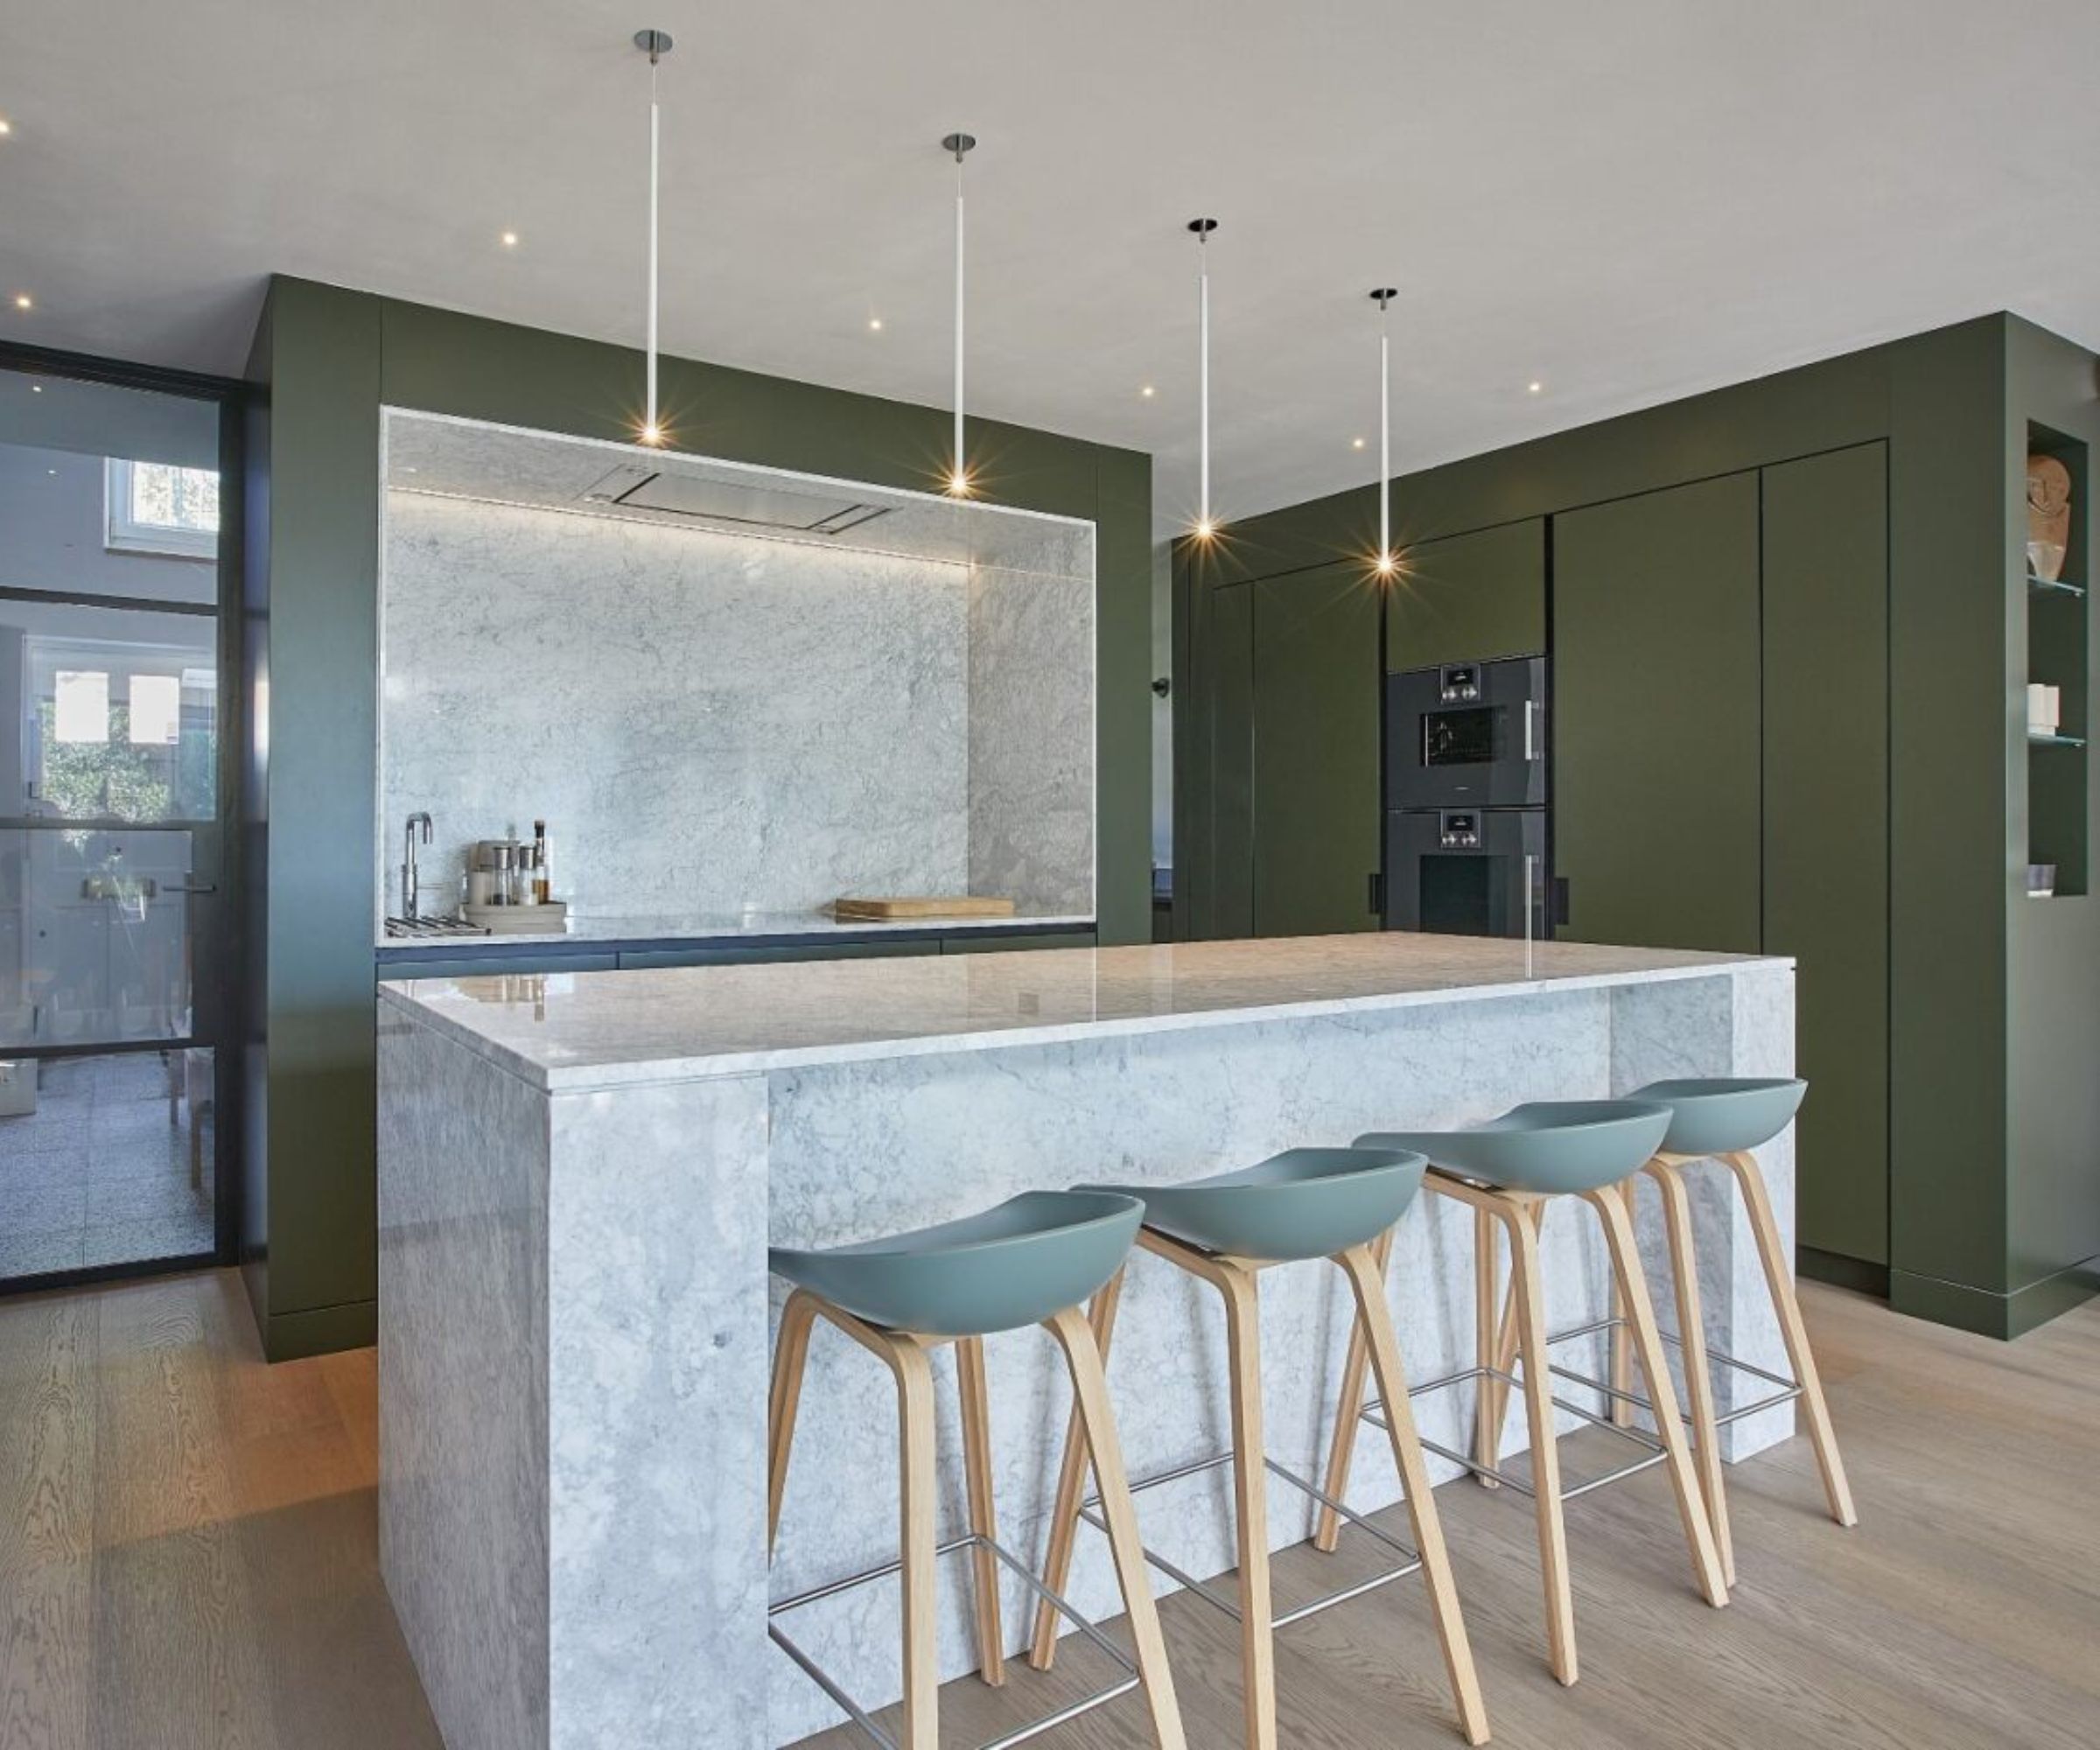 Olive green kitchen cabinets in a minimalist kitchen